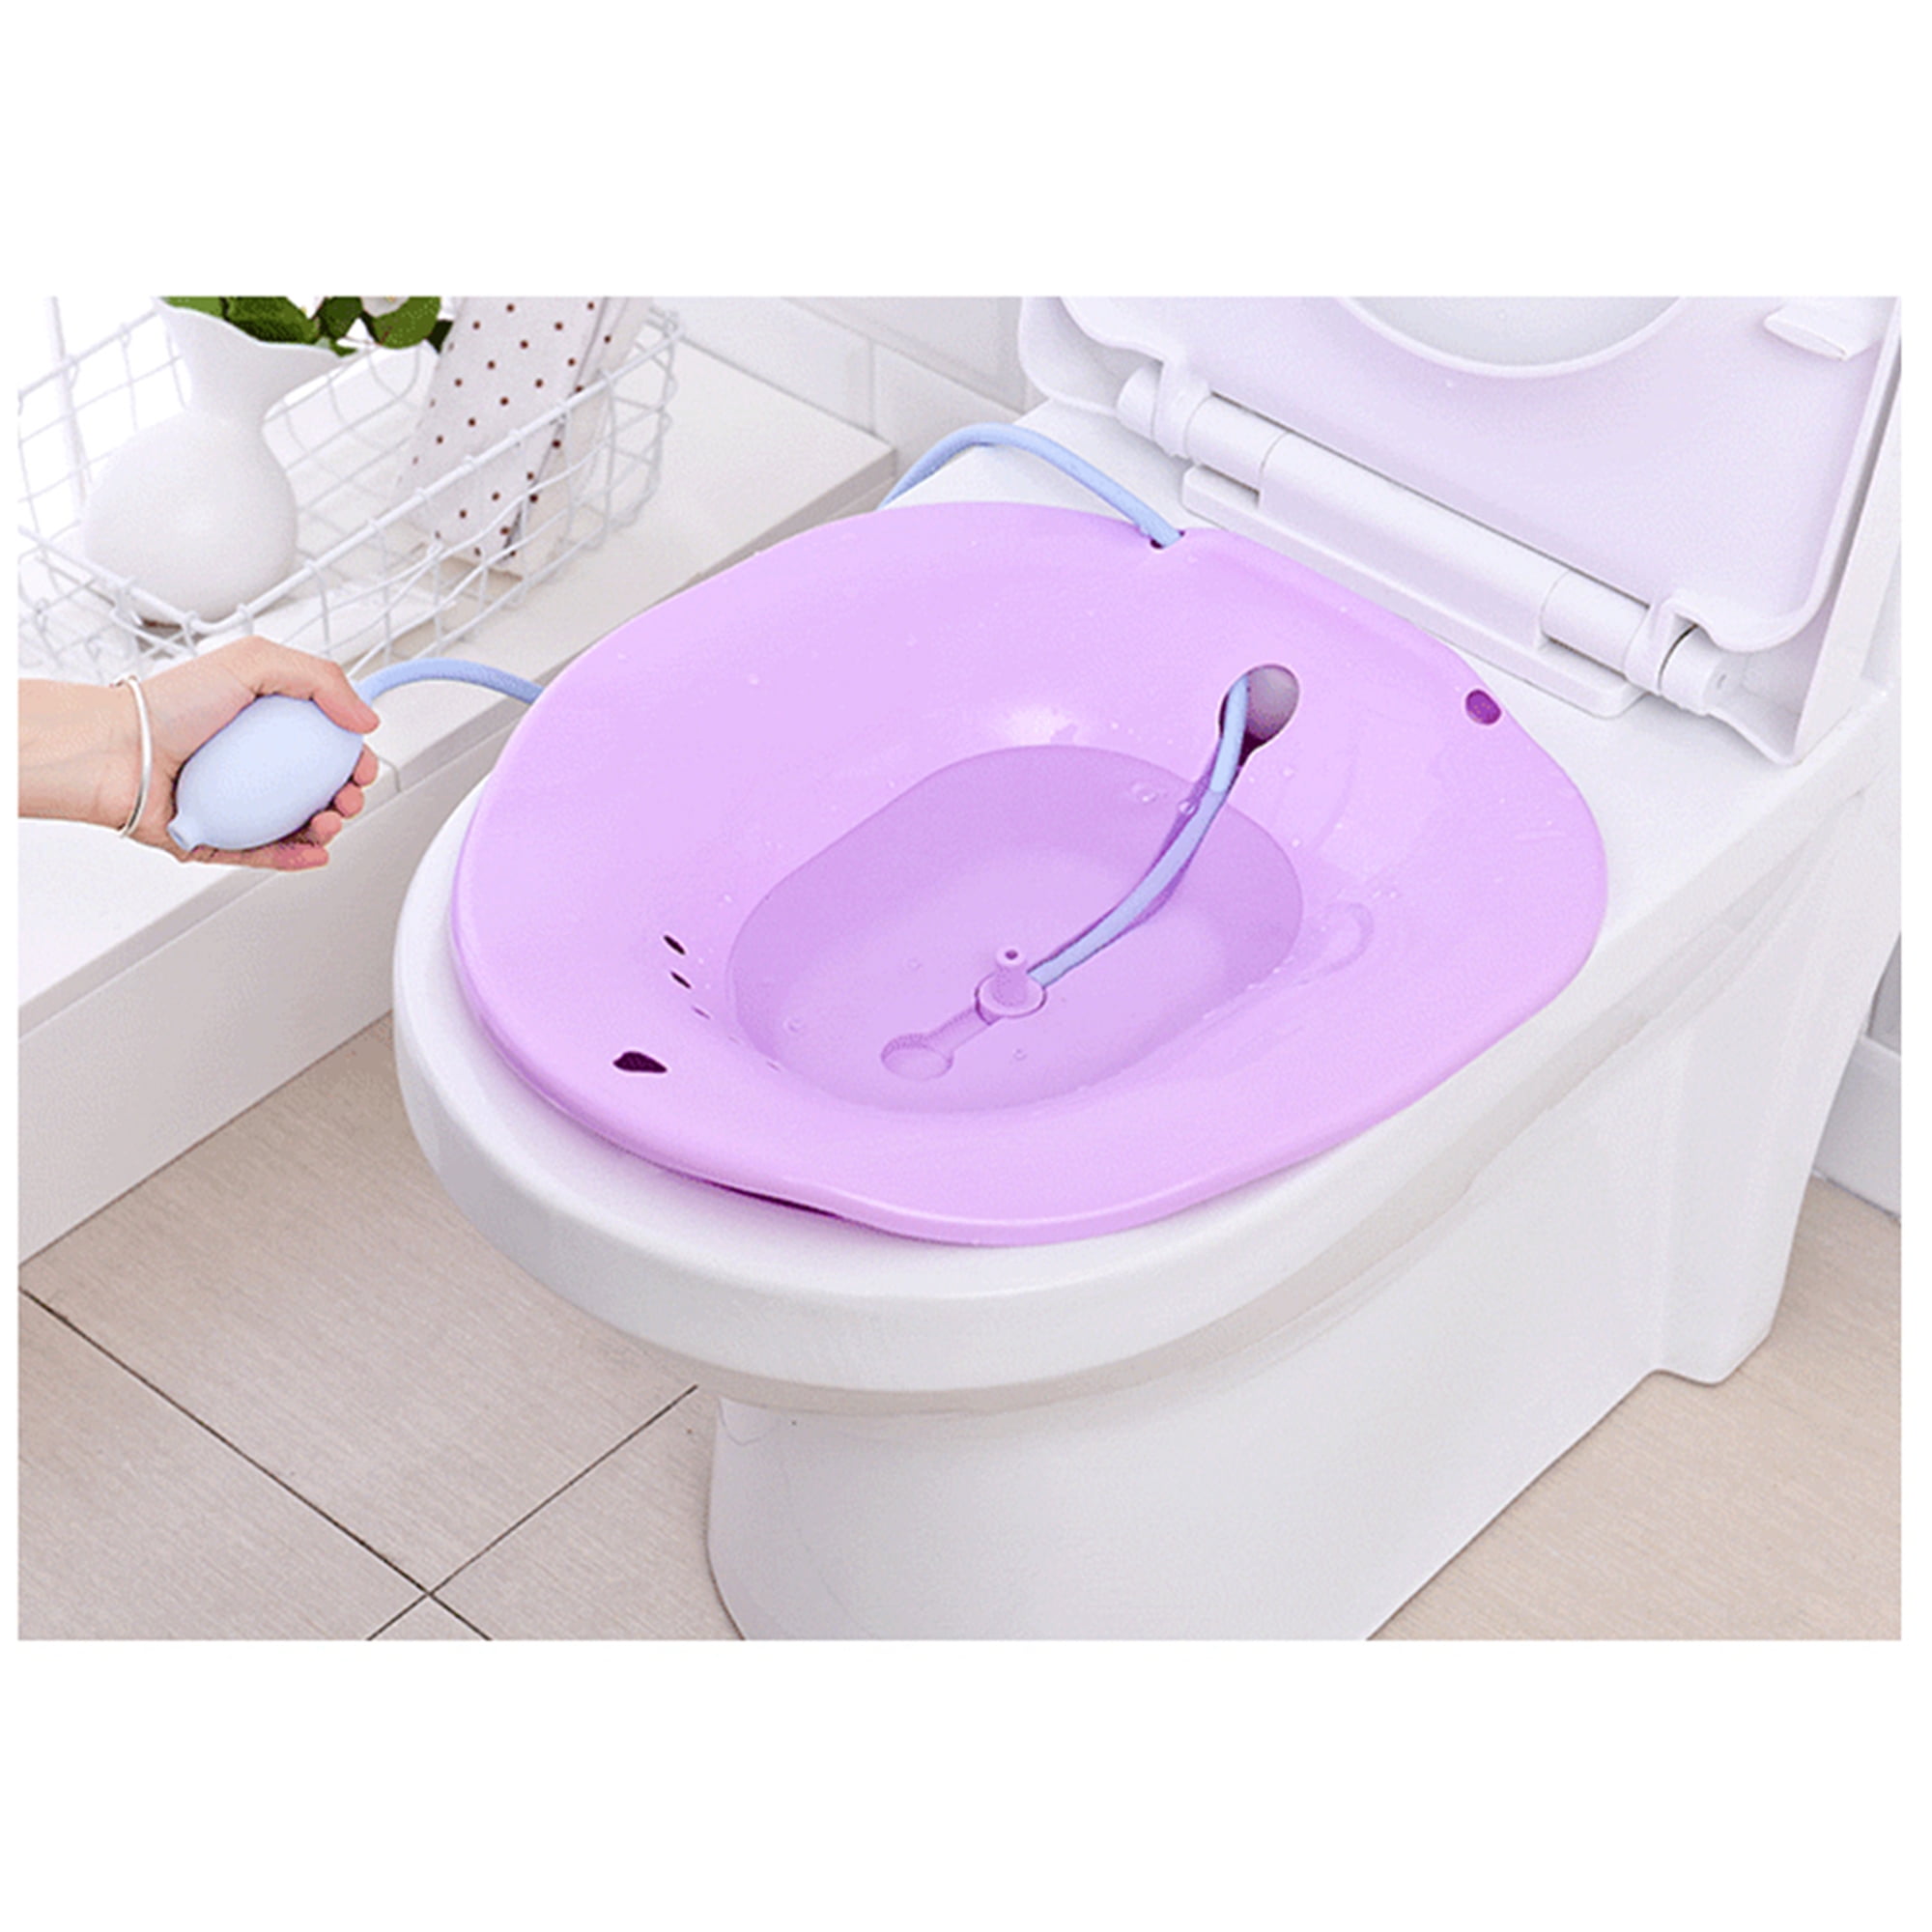 Bidet Non-Electric Sprayer Toilet Seat Attachment Pregnant Self Cleaning 0003 